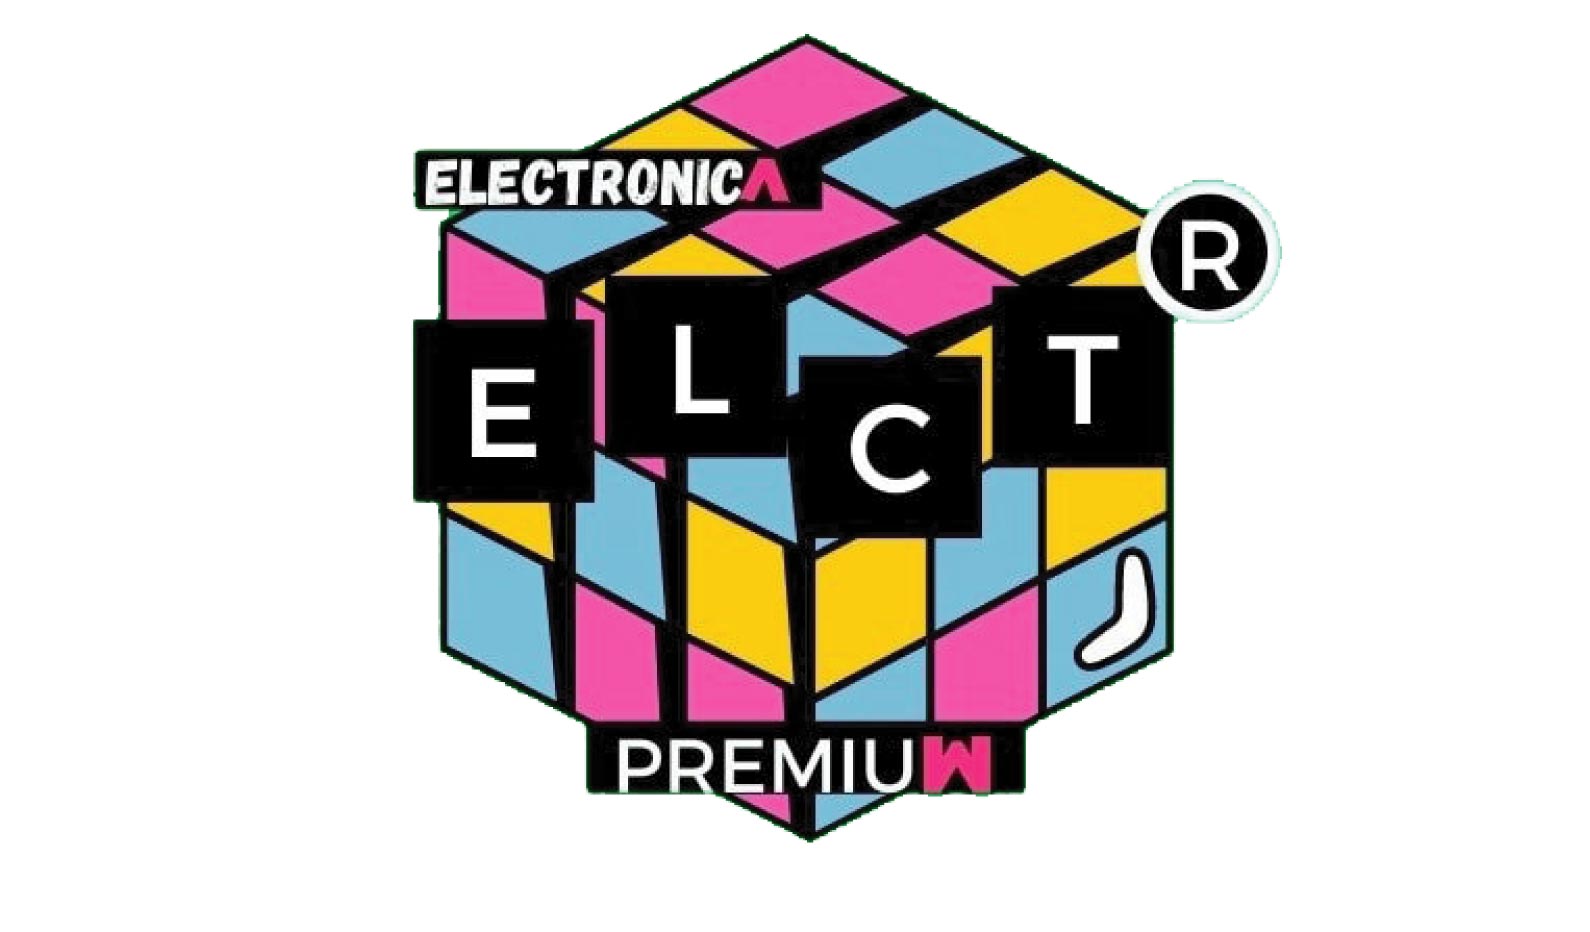 Electrónica Premium